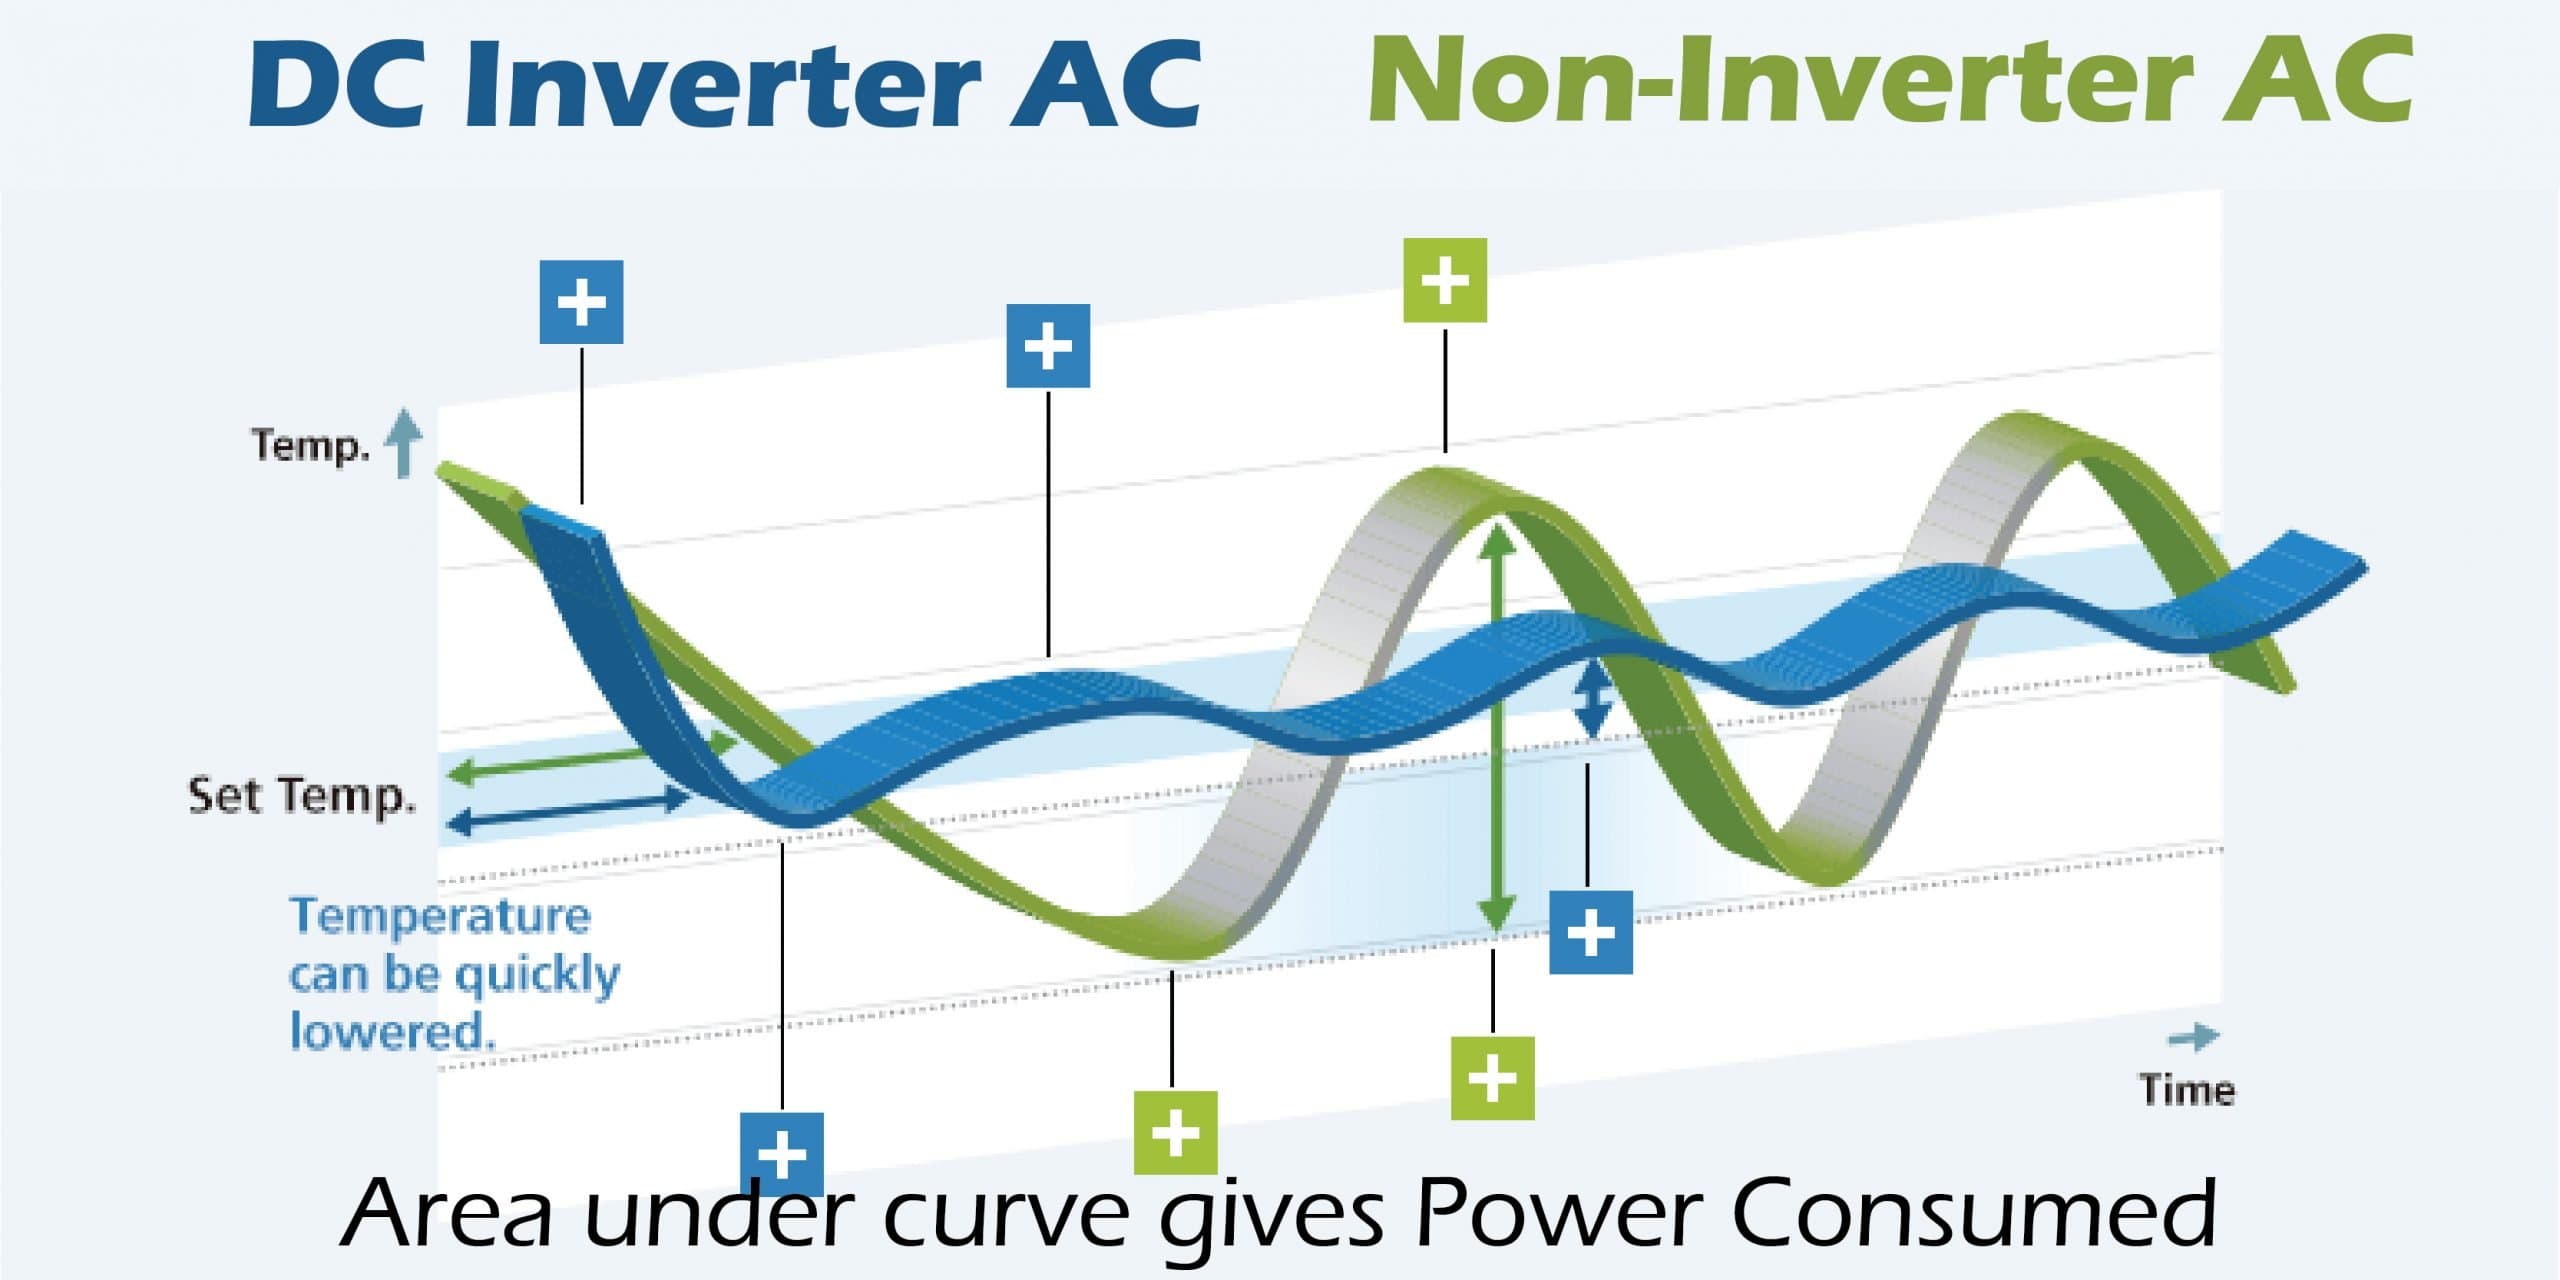 DC inverter AC power Consumption